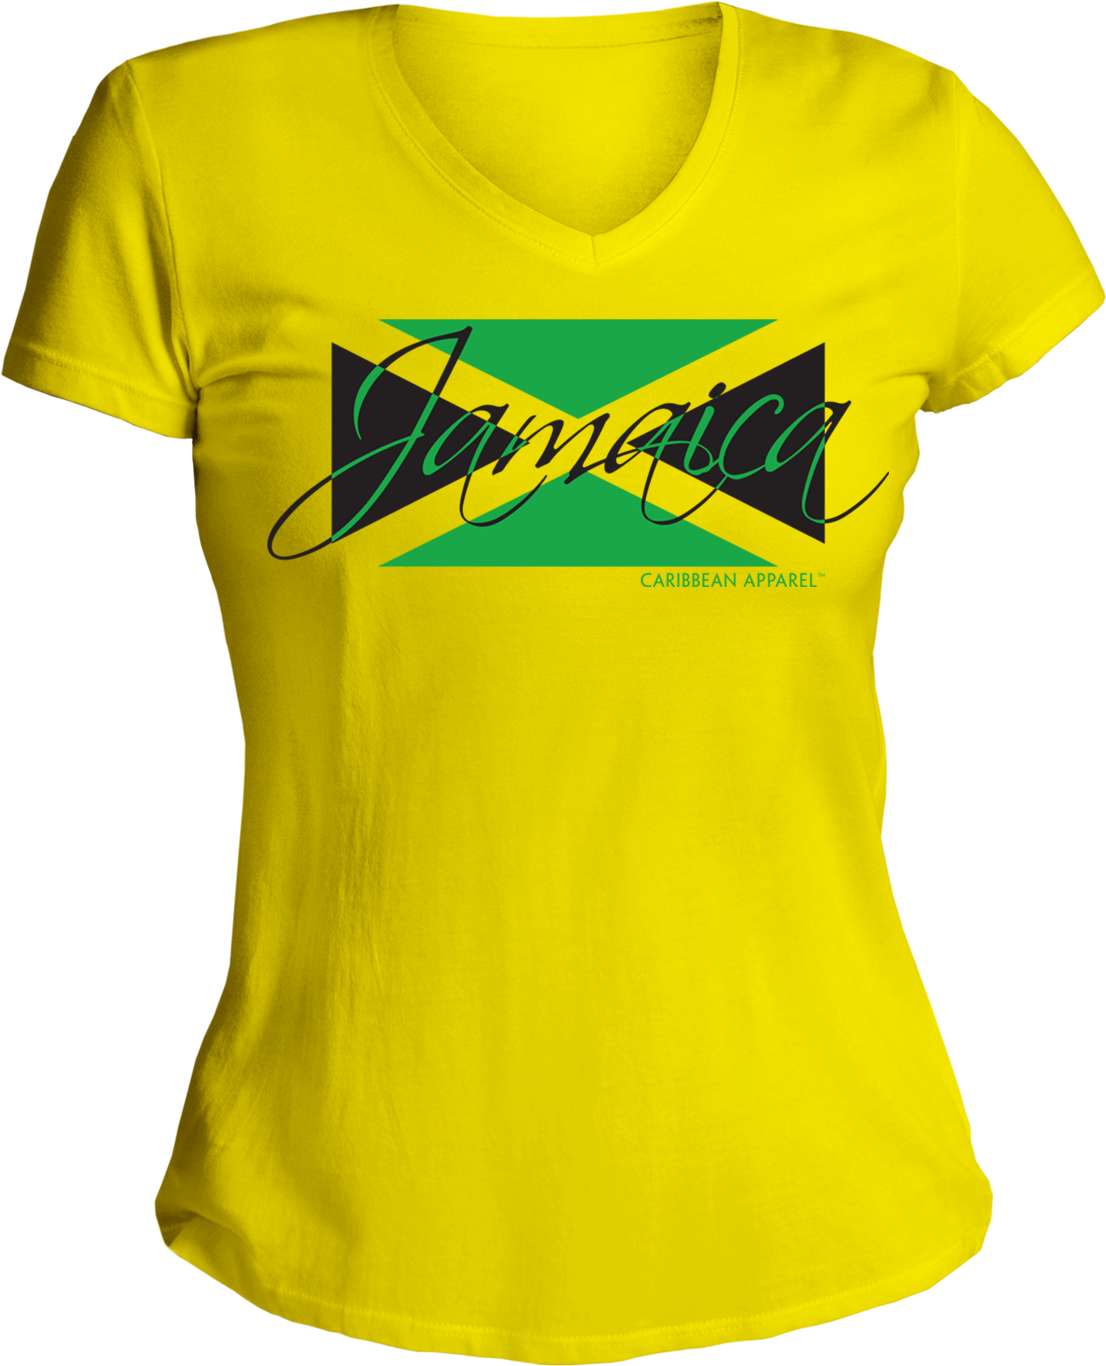 Jamaica Caribbean Apparel Yellow Tshirt PNG image